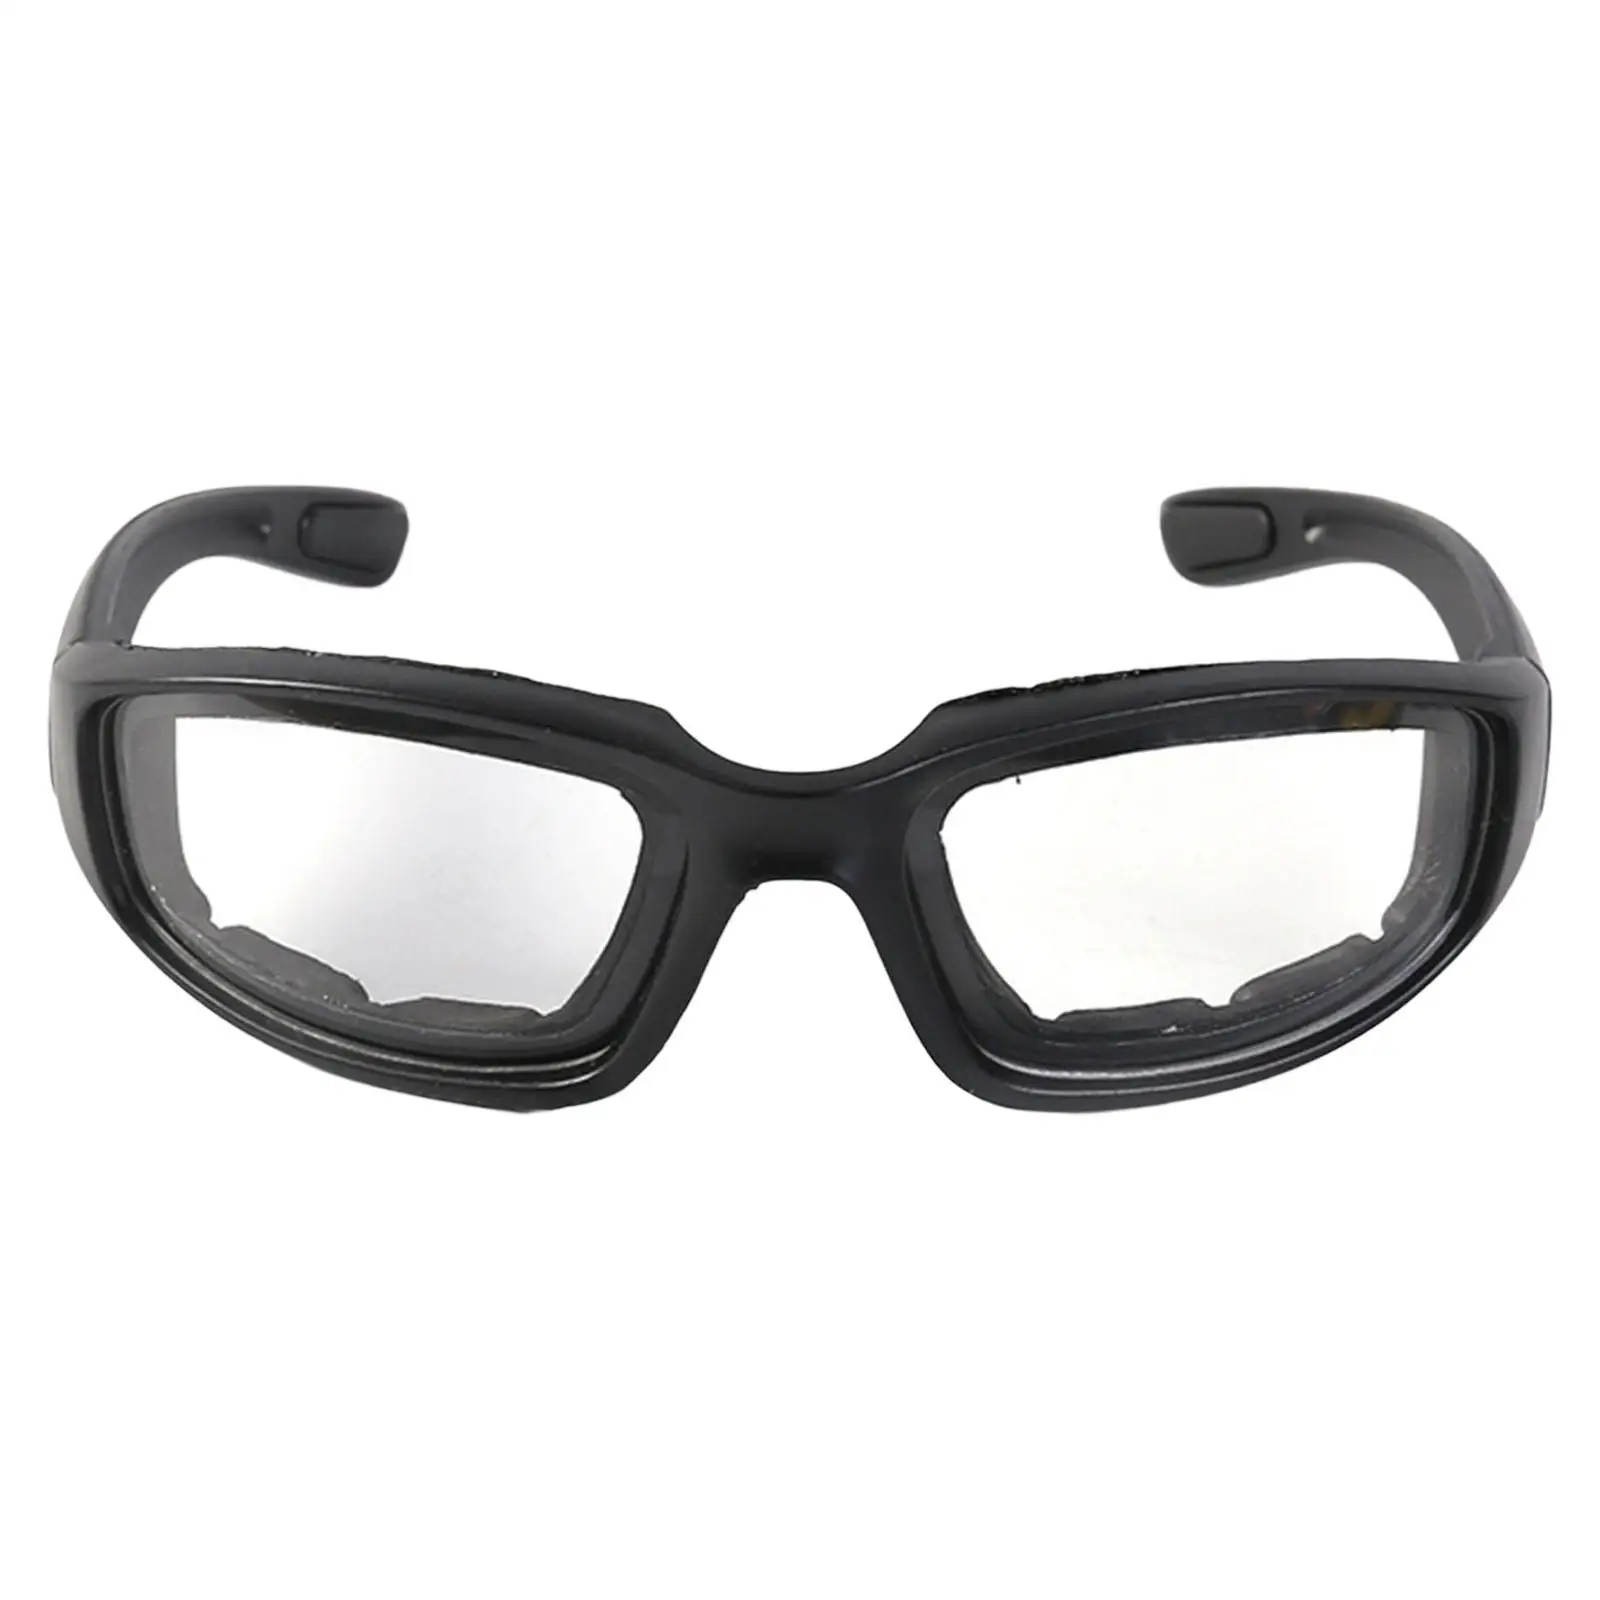 Motorcycle Riding Goggles Cycling Glasses Eye Protector Eyewear Sponge Frame for Fishing Women Men Baseball Golf Driving